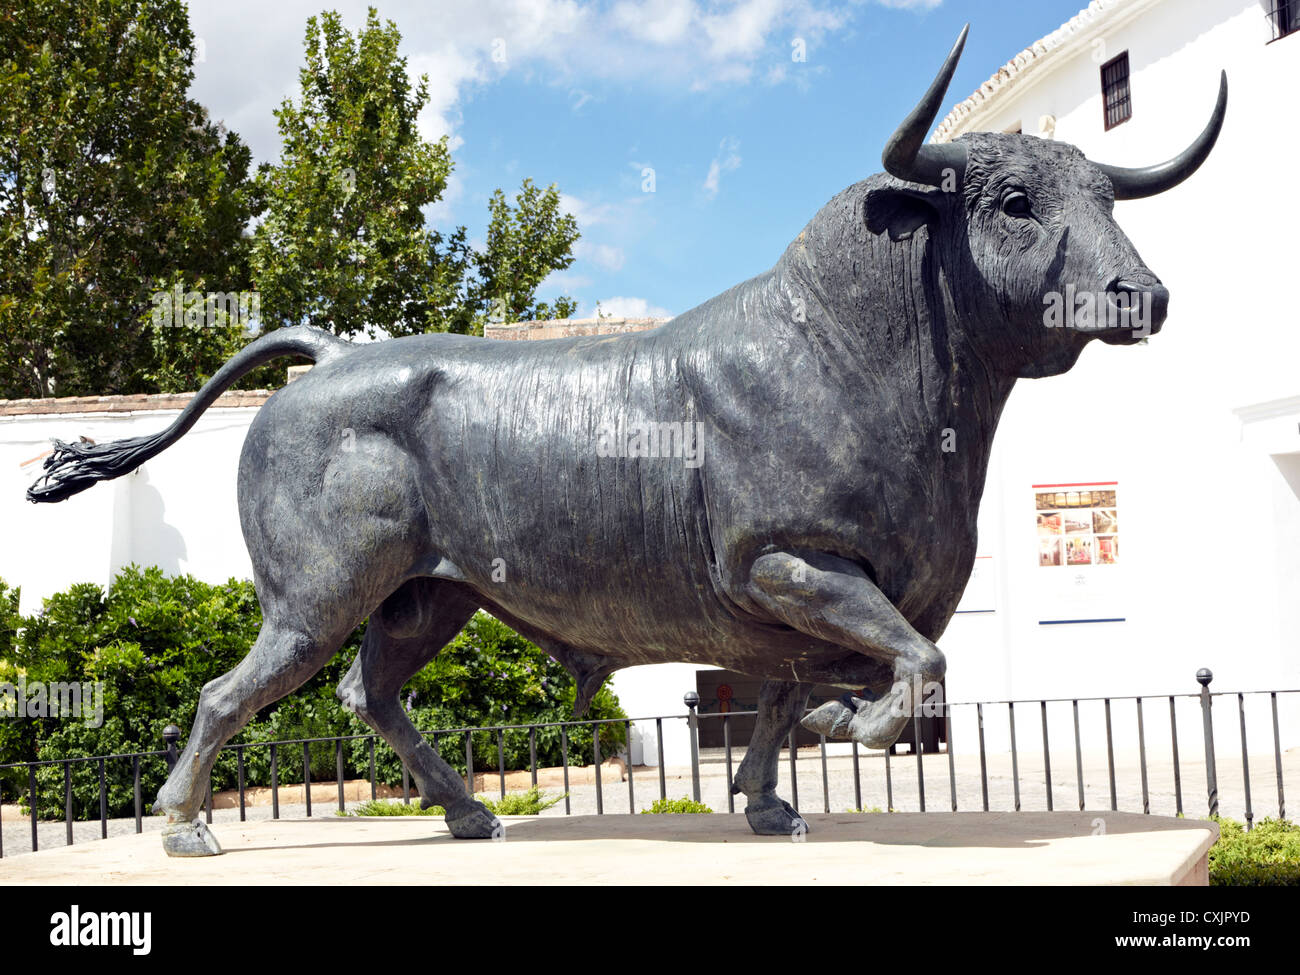 Estatua del toro españa fotografías e imágenes de alta resolución - Alamy